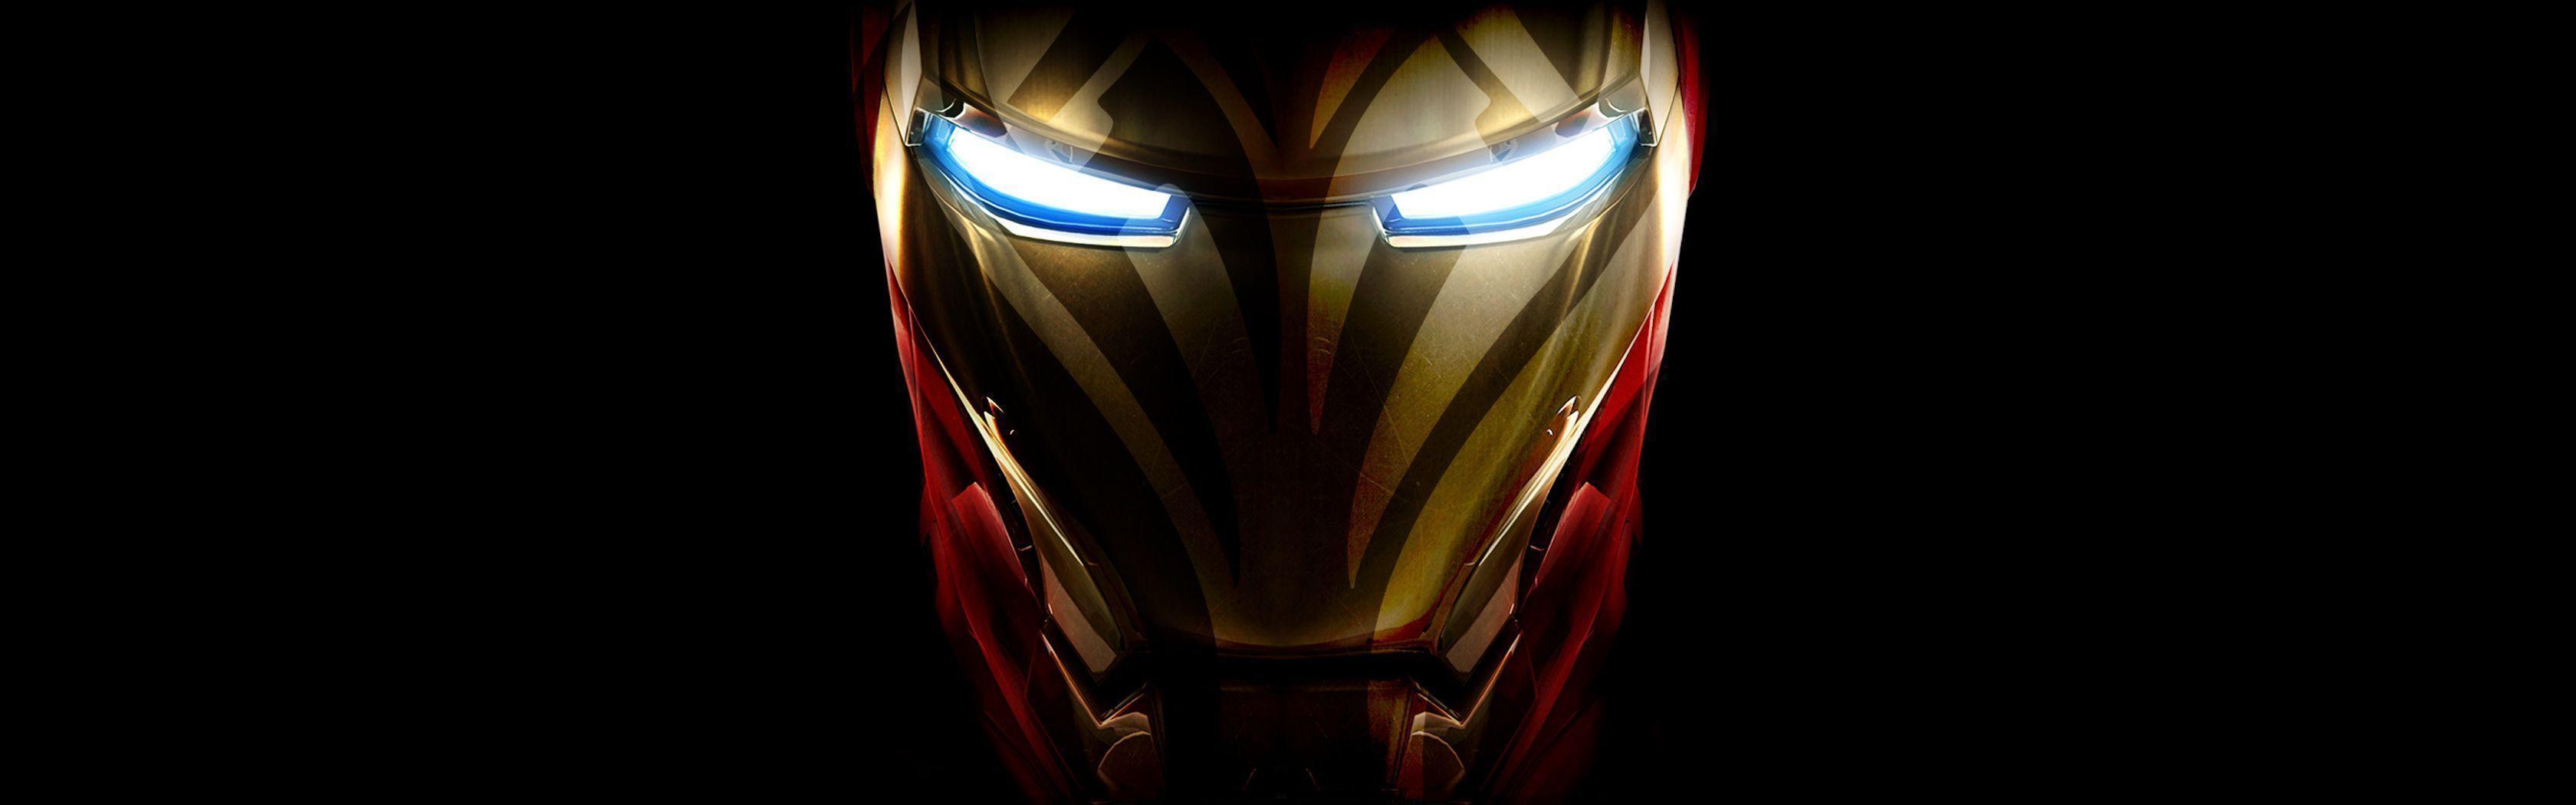 Iron Man HD Wallpaper Design You Trust. Design, Culture & Society